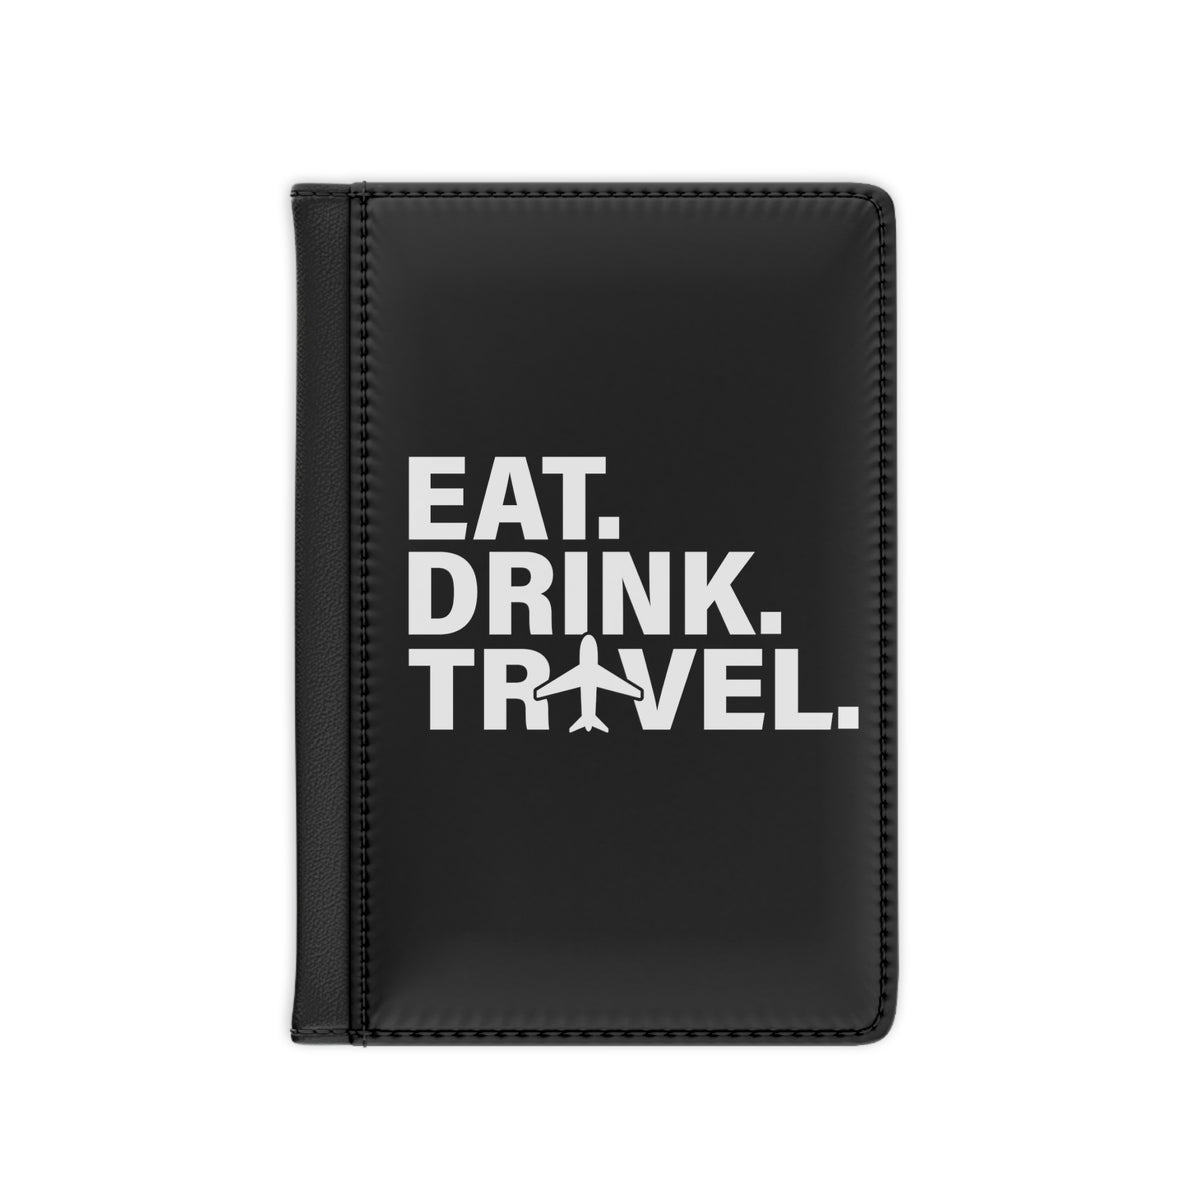 Eat. Drink. Travel. Passport Cover